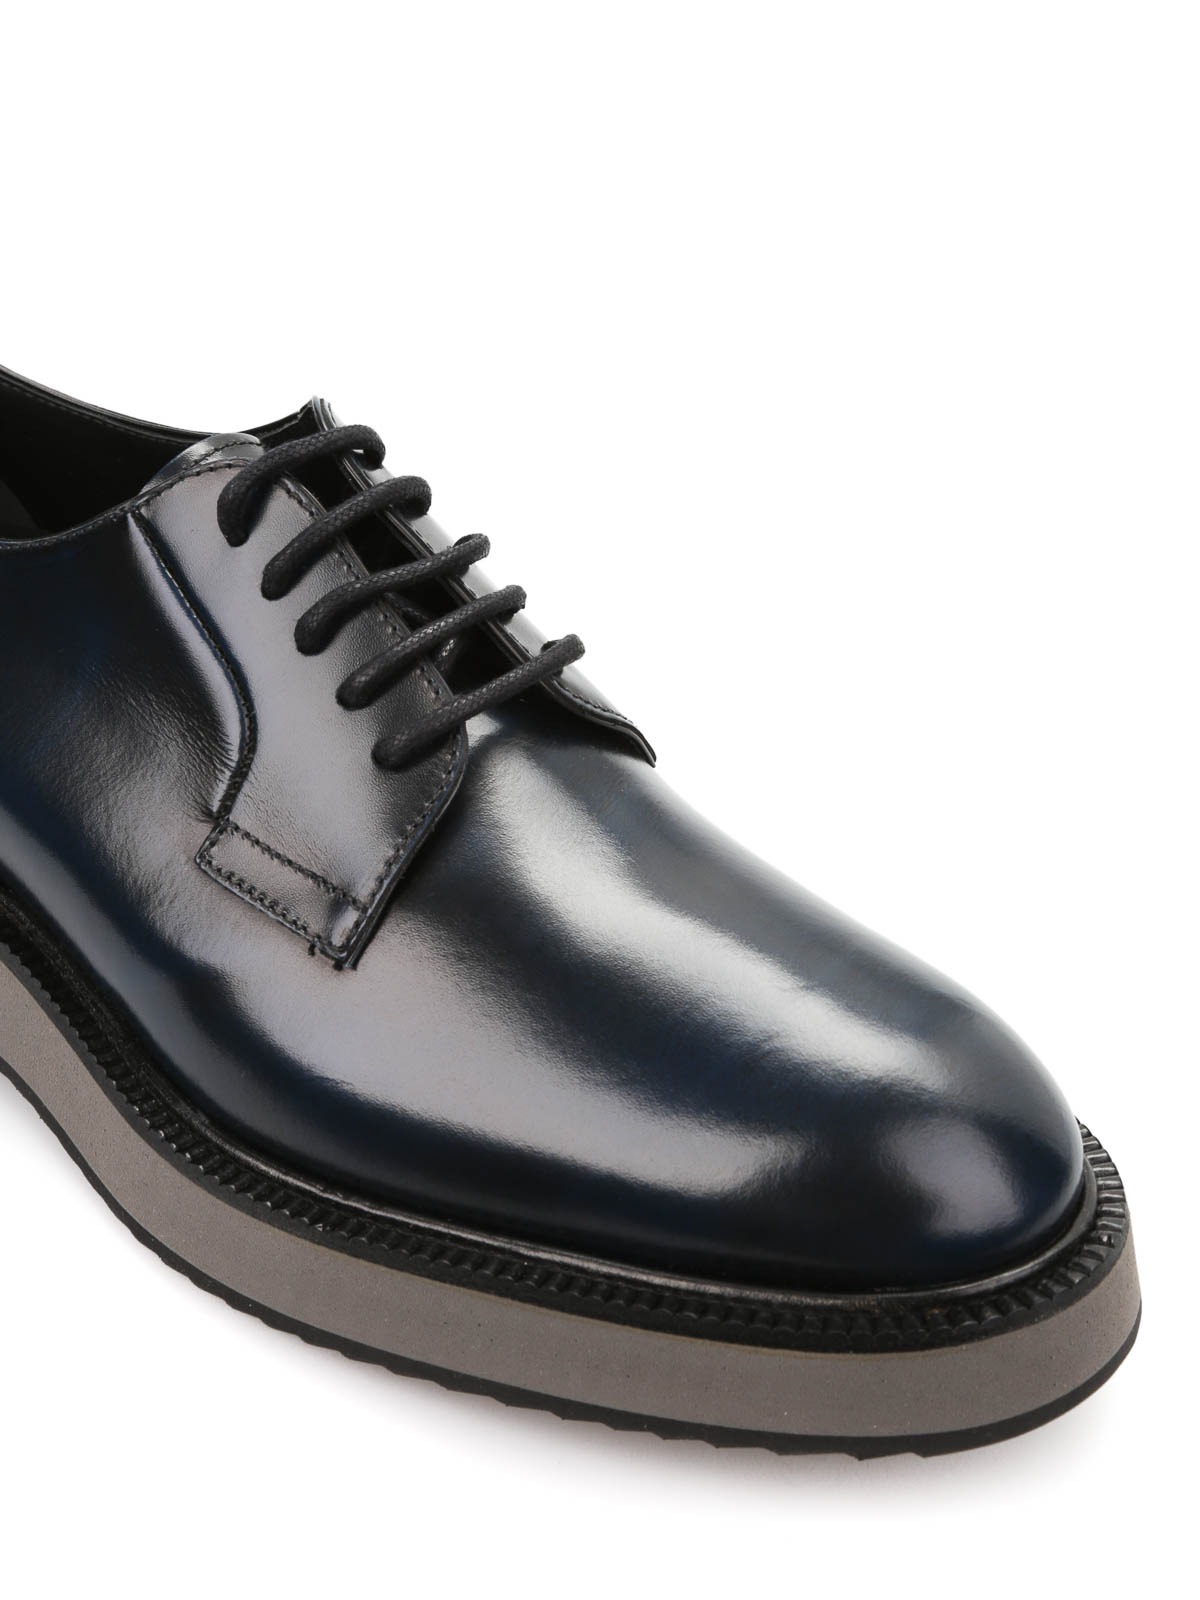 zwart olifant manager Lace-ups shoes Hogan - H271 derby shoes - HXM2710S5606Q6U807 | iKRIX.com